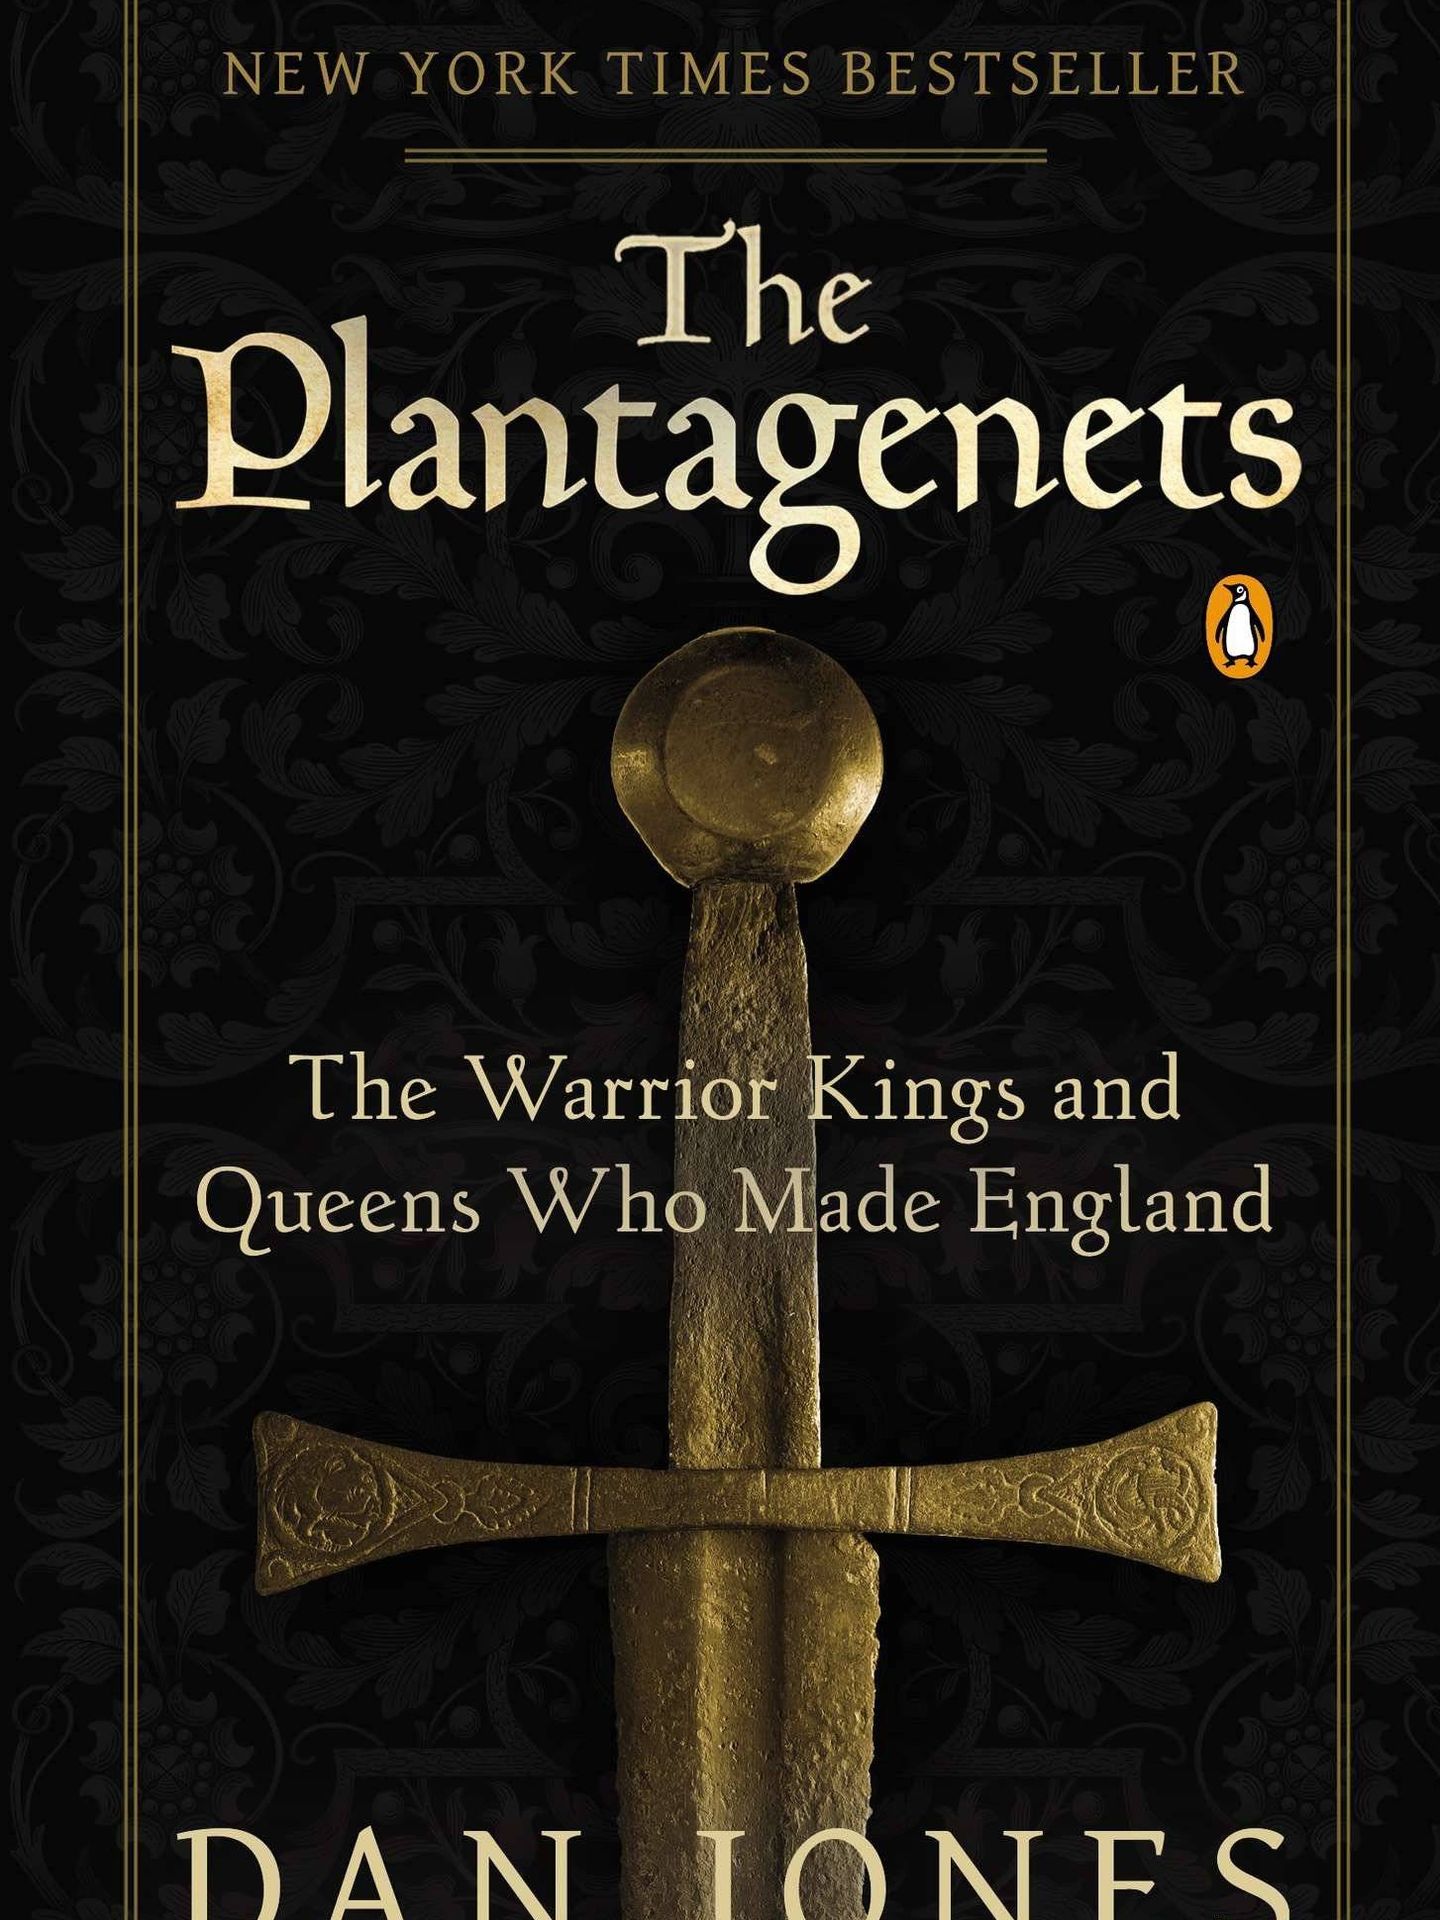  'The Plantagenets'. (Amazon)